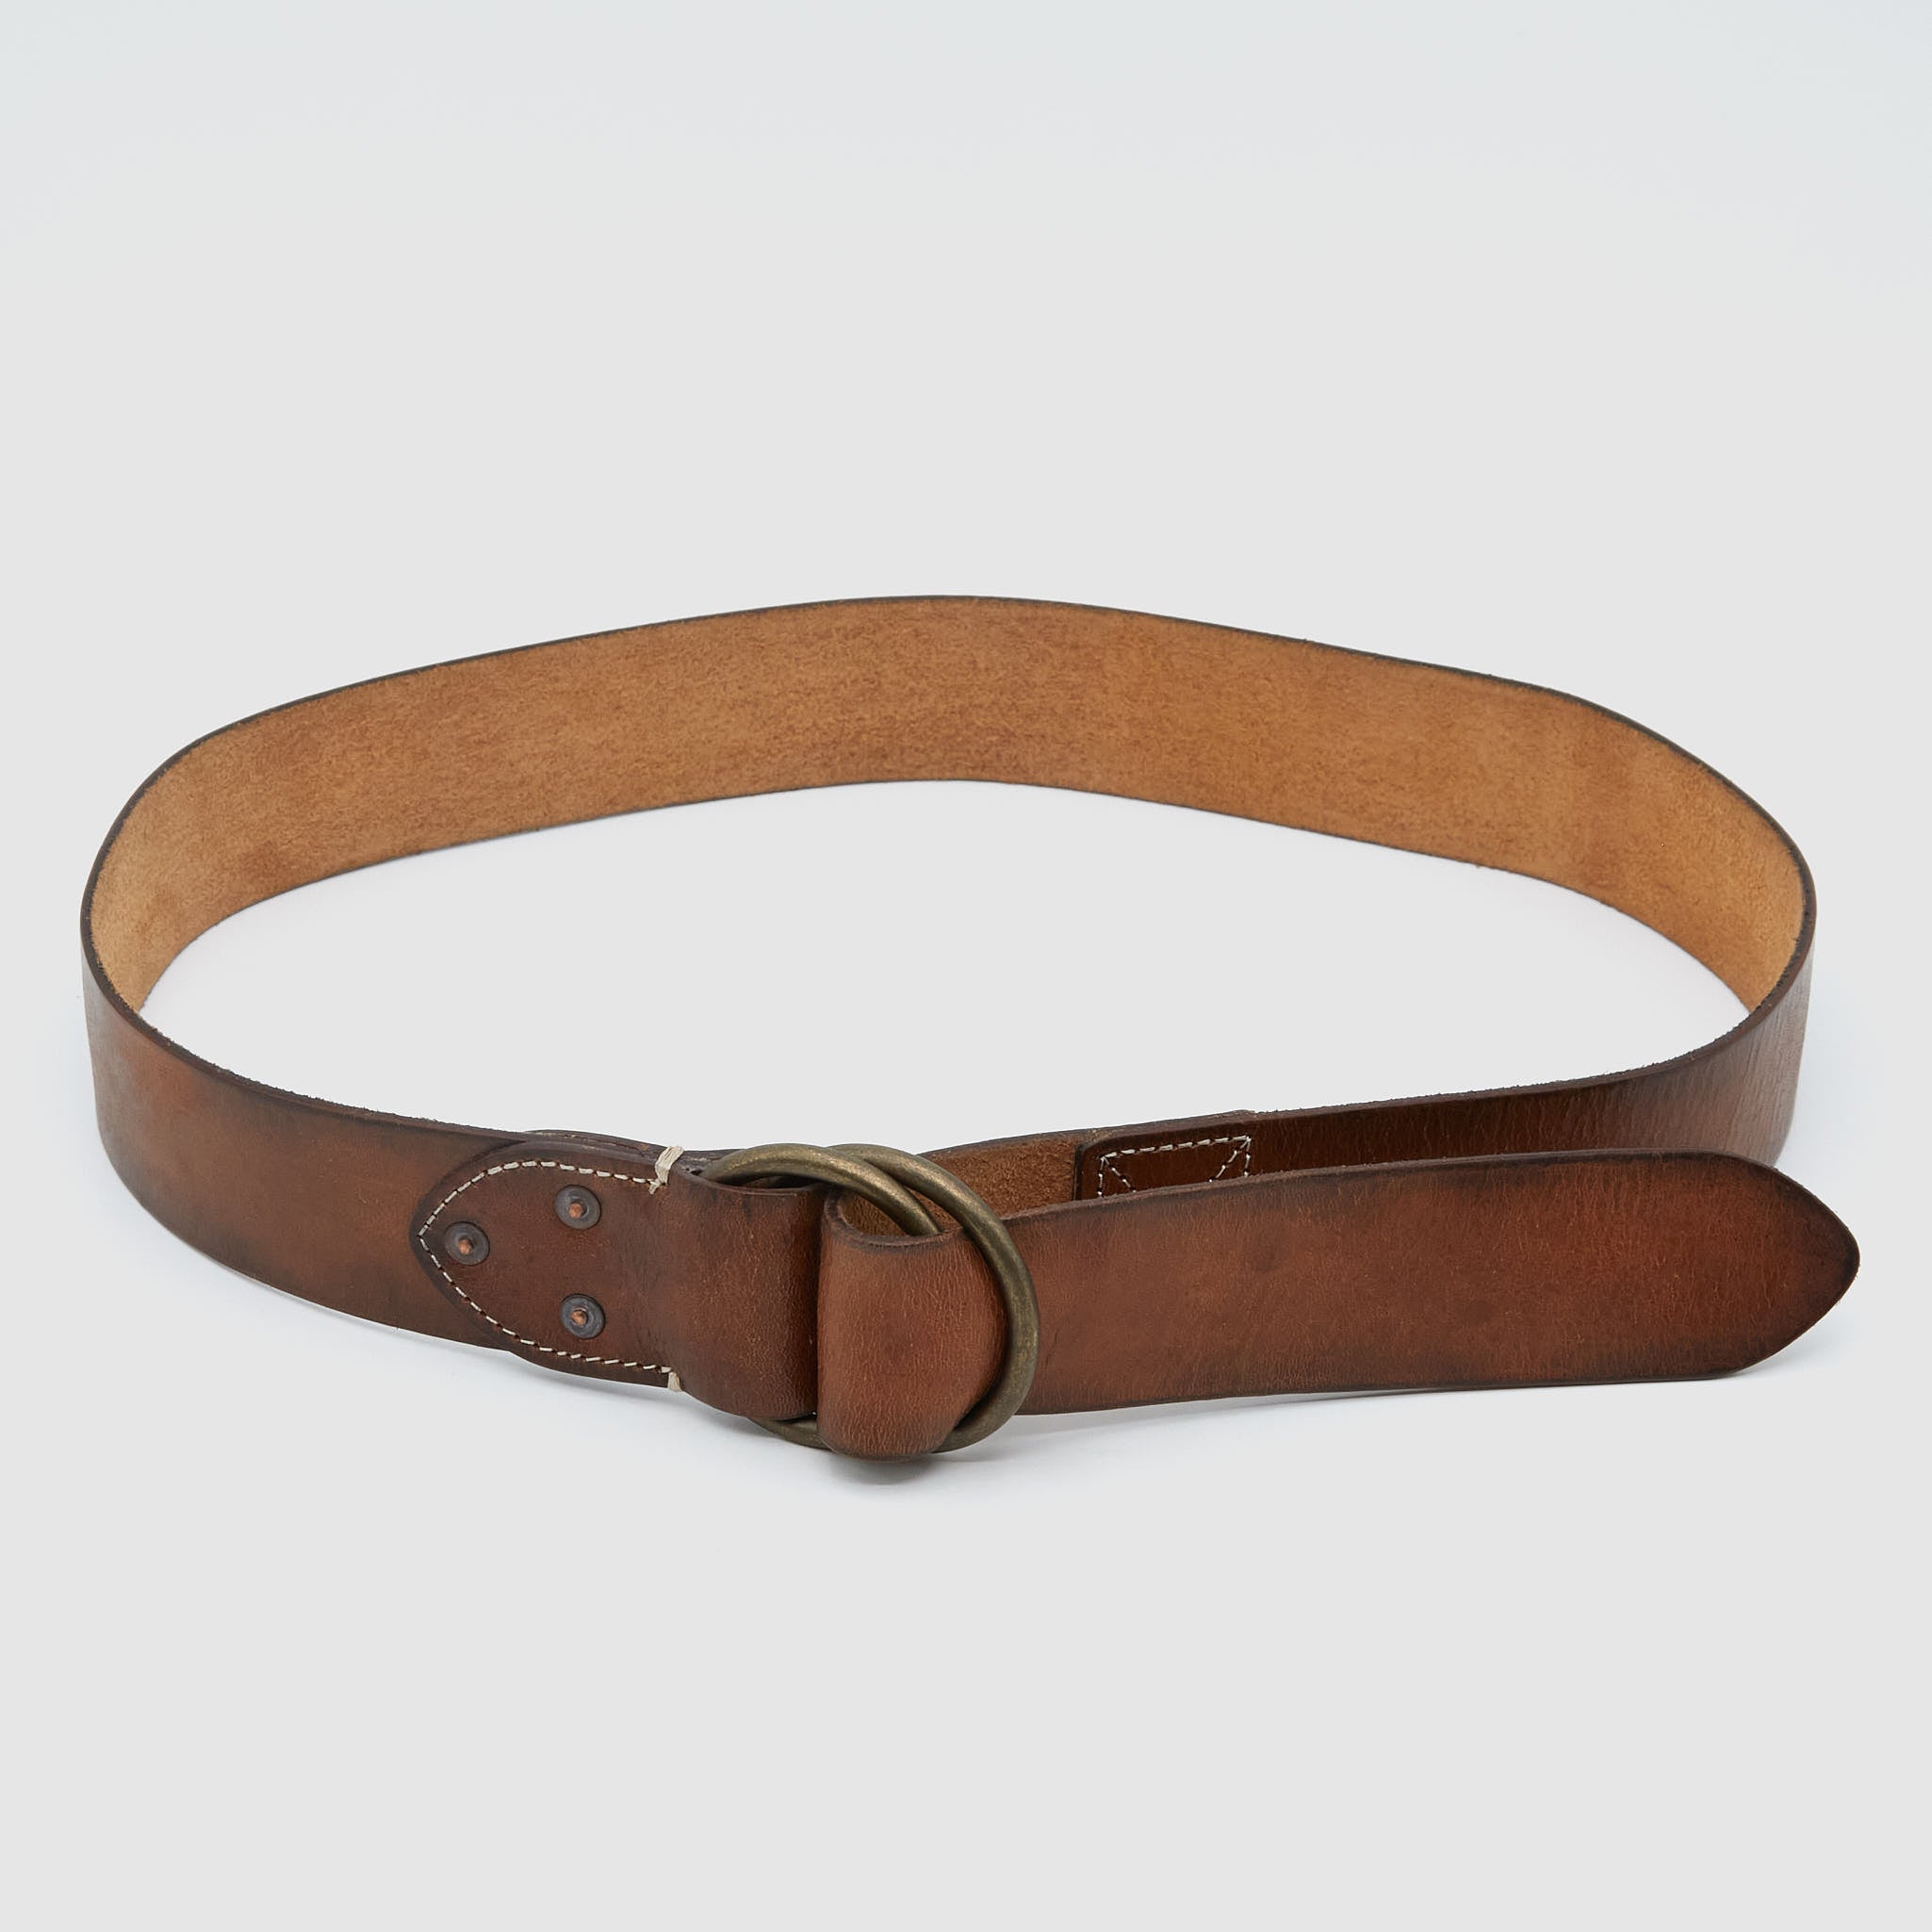 Double RL LeatherDouble- O- Ring Belt - DeeCee style